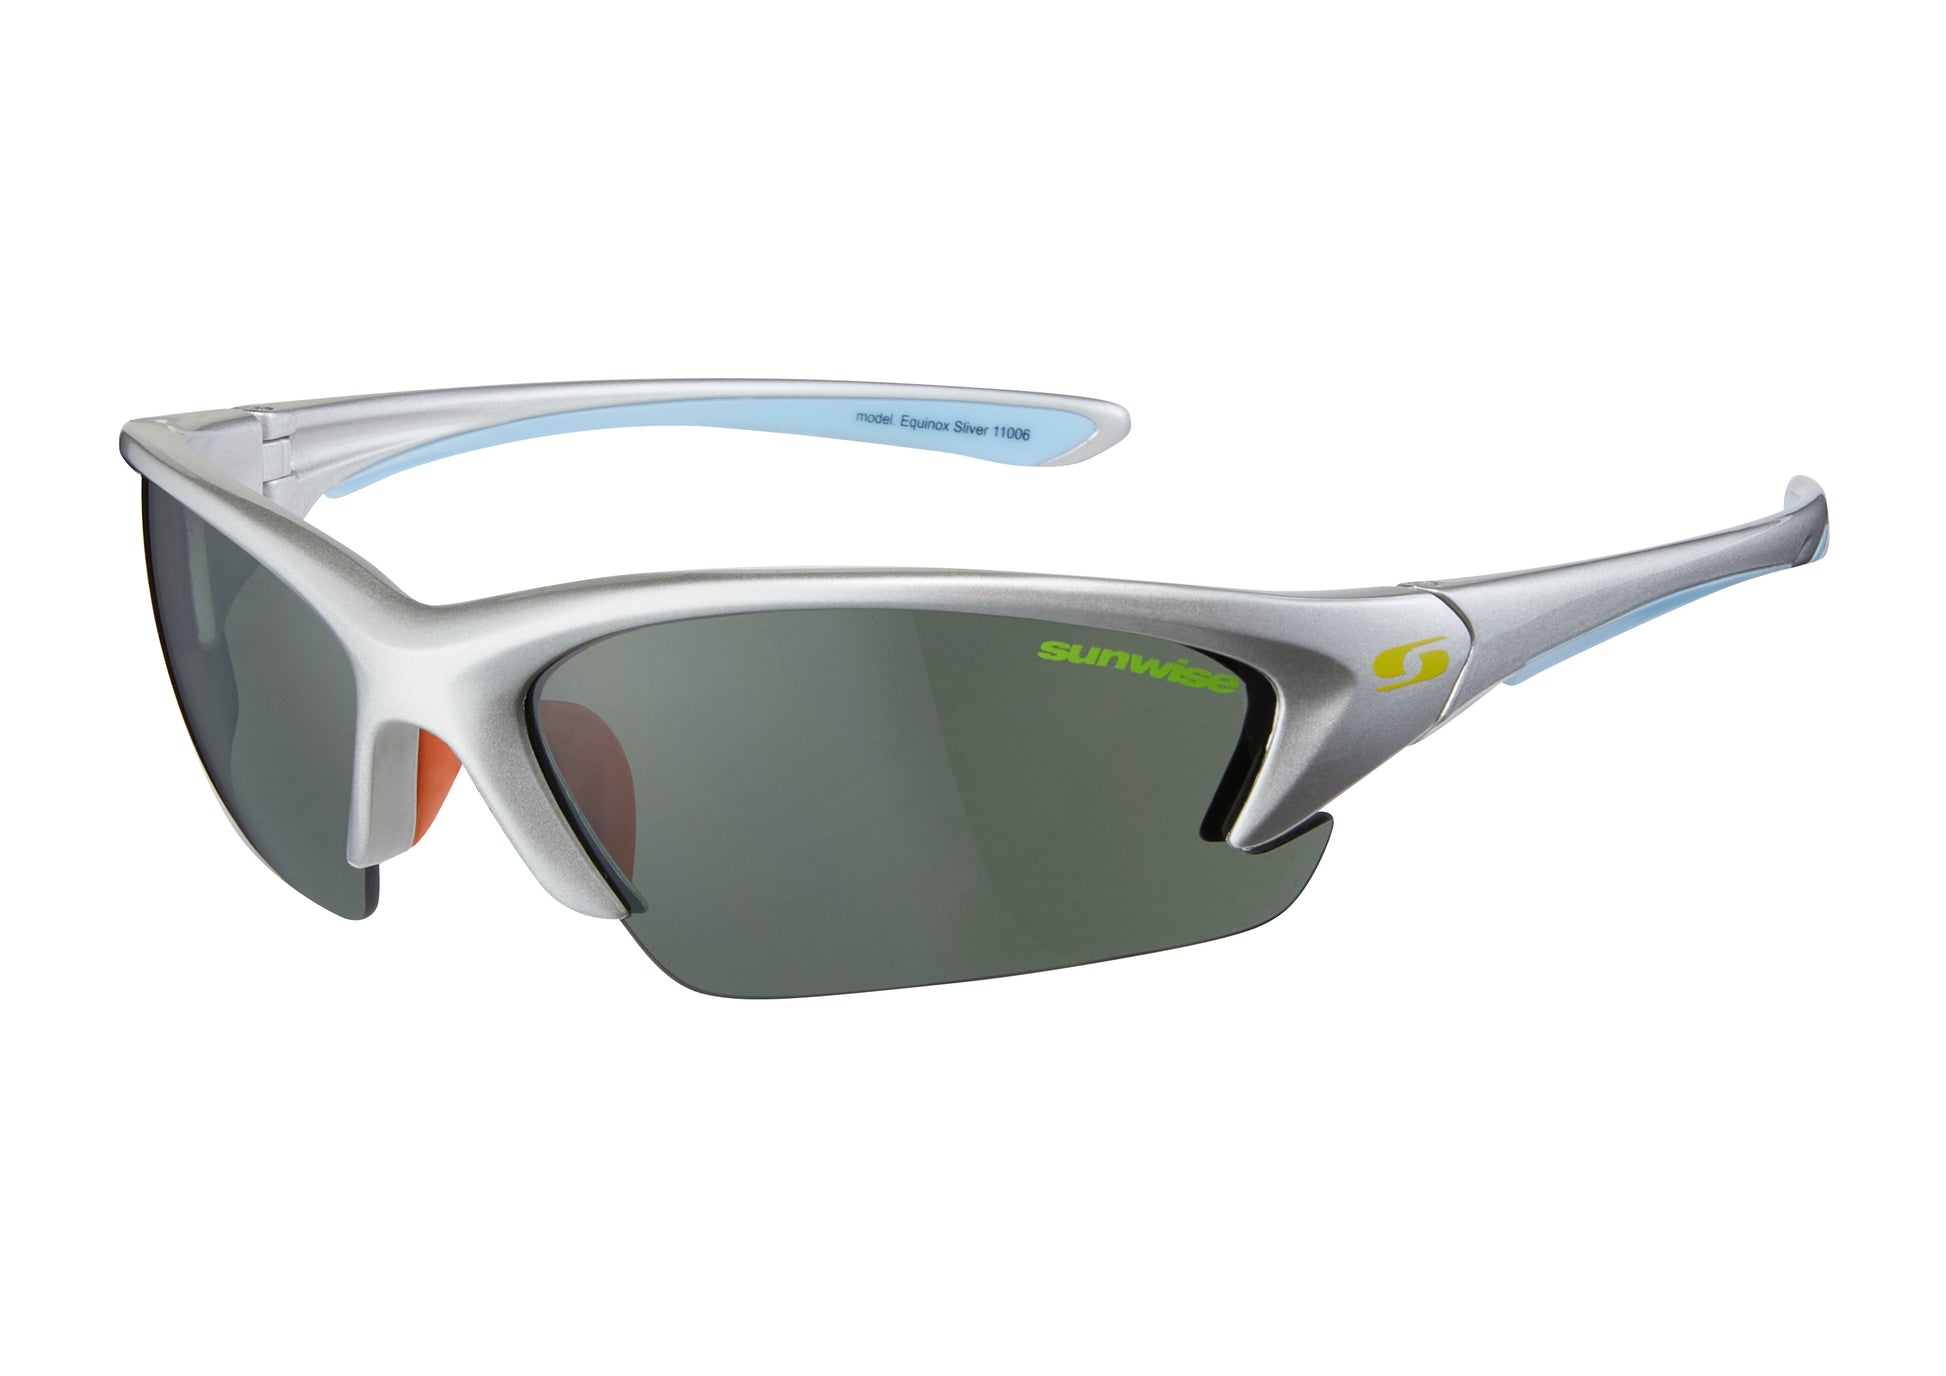 Sunwise Equinox Silver Sports Sunglasses